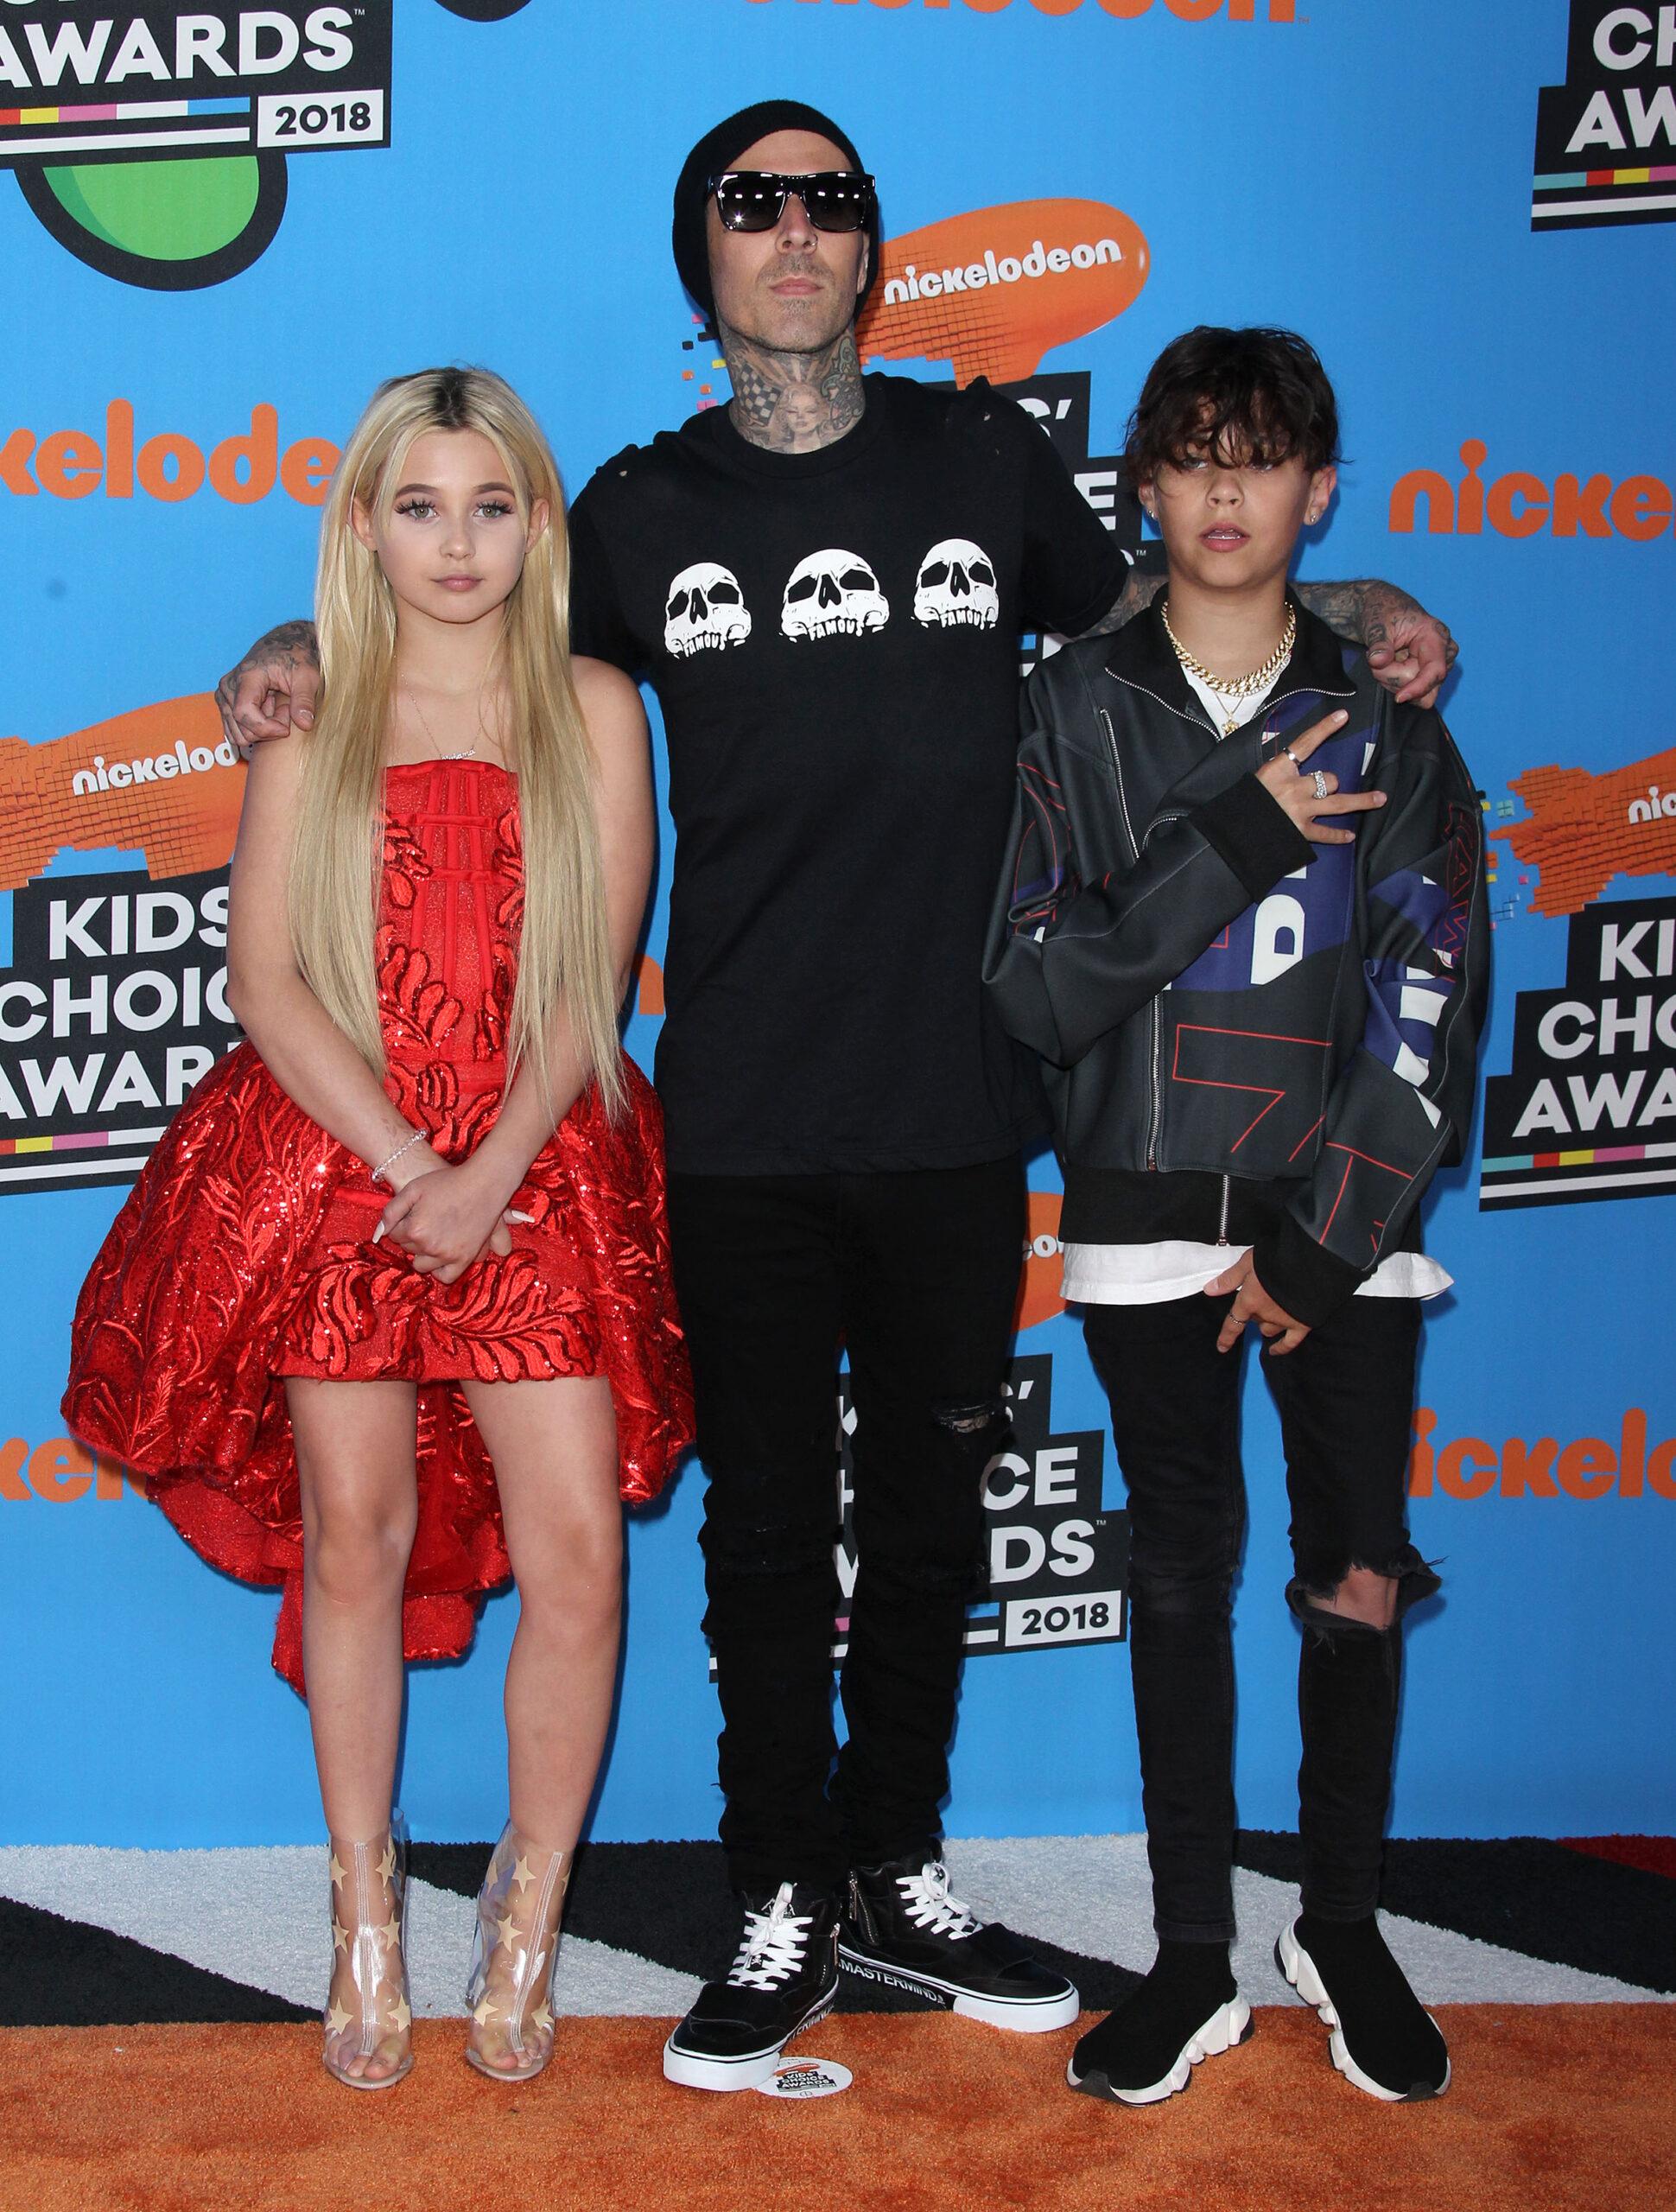 Kids Choice Awards - Los Angeles. 24 Mar 2018 Pictured: Travis Barker, Alabama Barker. Photo credit: Jaxon / MEGA TheMegaAgency.com +1 888 505 6342 (Mega Agency TagID: MEGA189076_095.jpg) [Photo via Mega Agency]